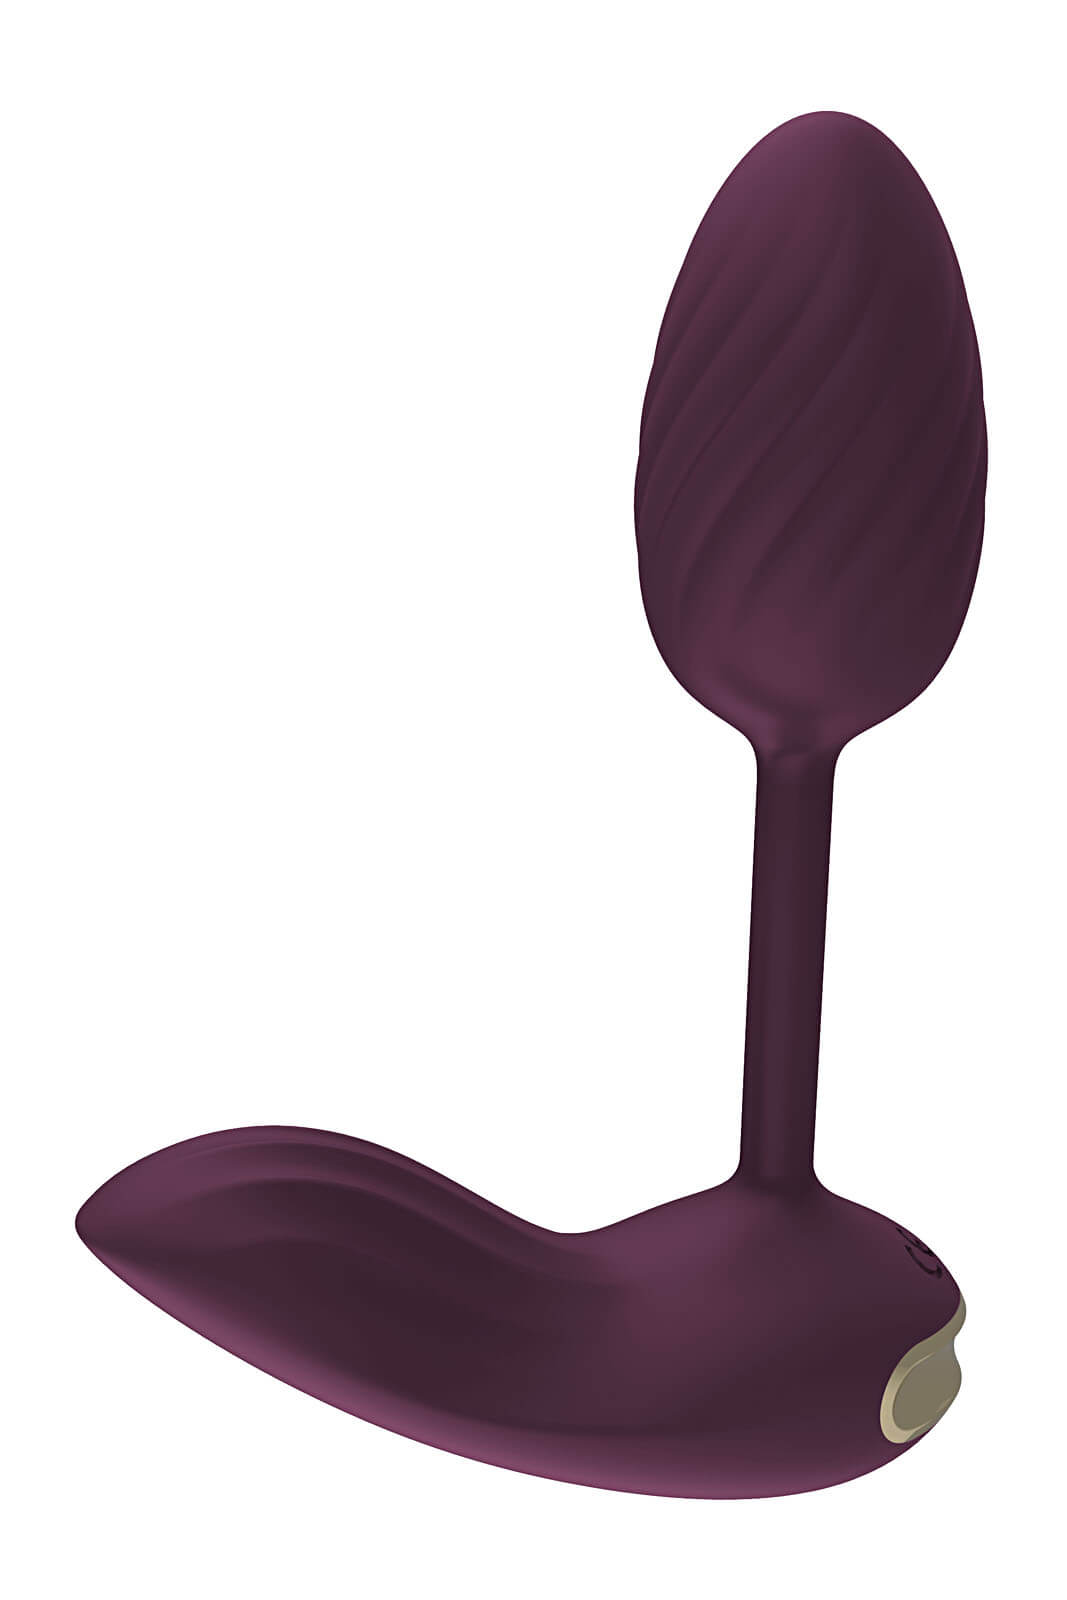 Dream Toys Essentials Wearable Egg Vibe (Purple), vaginálne vajíčko